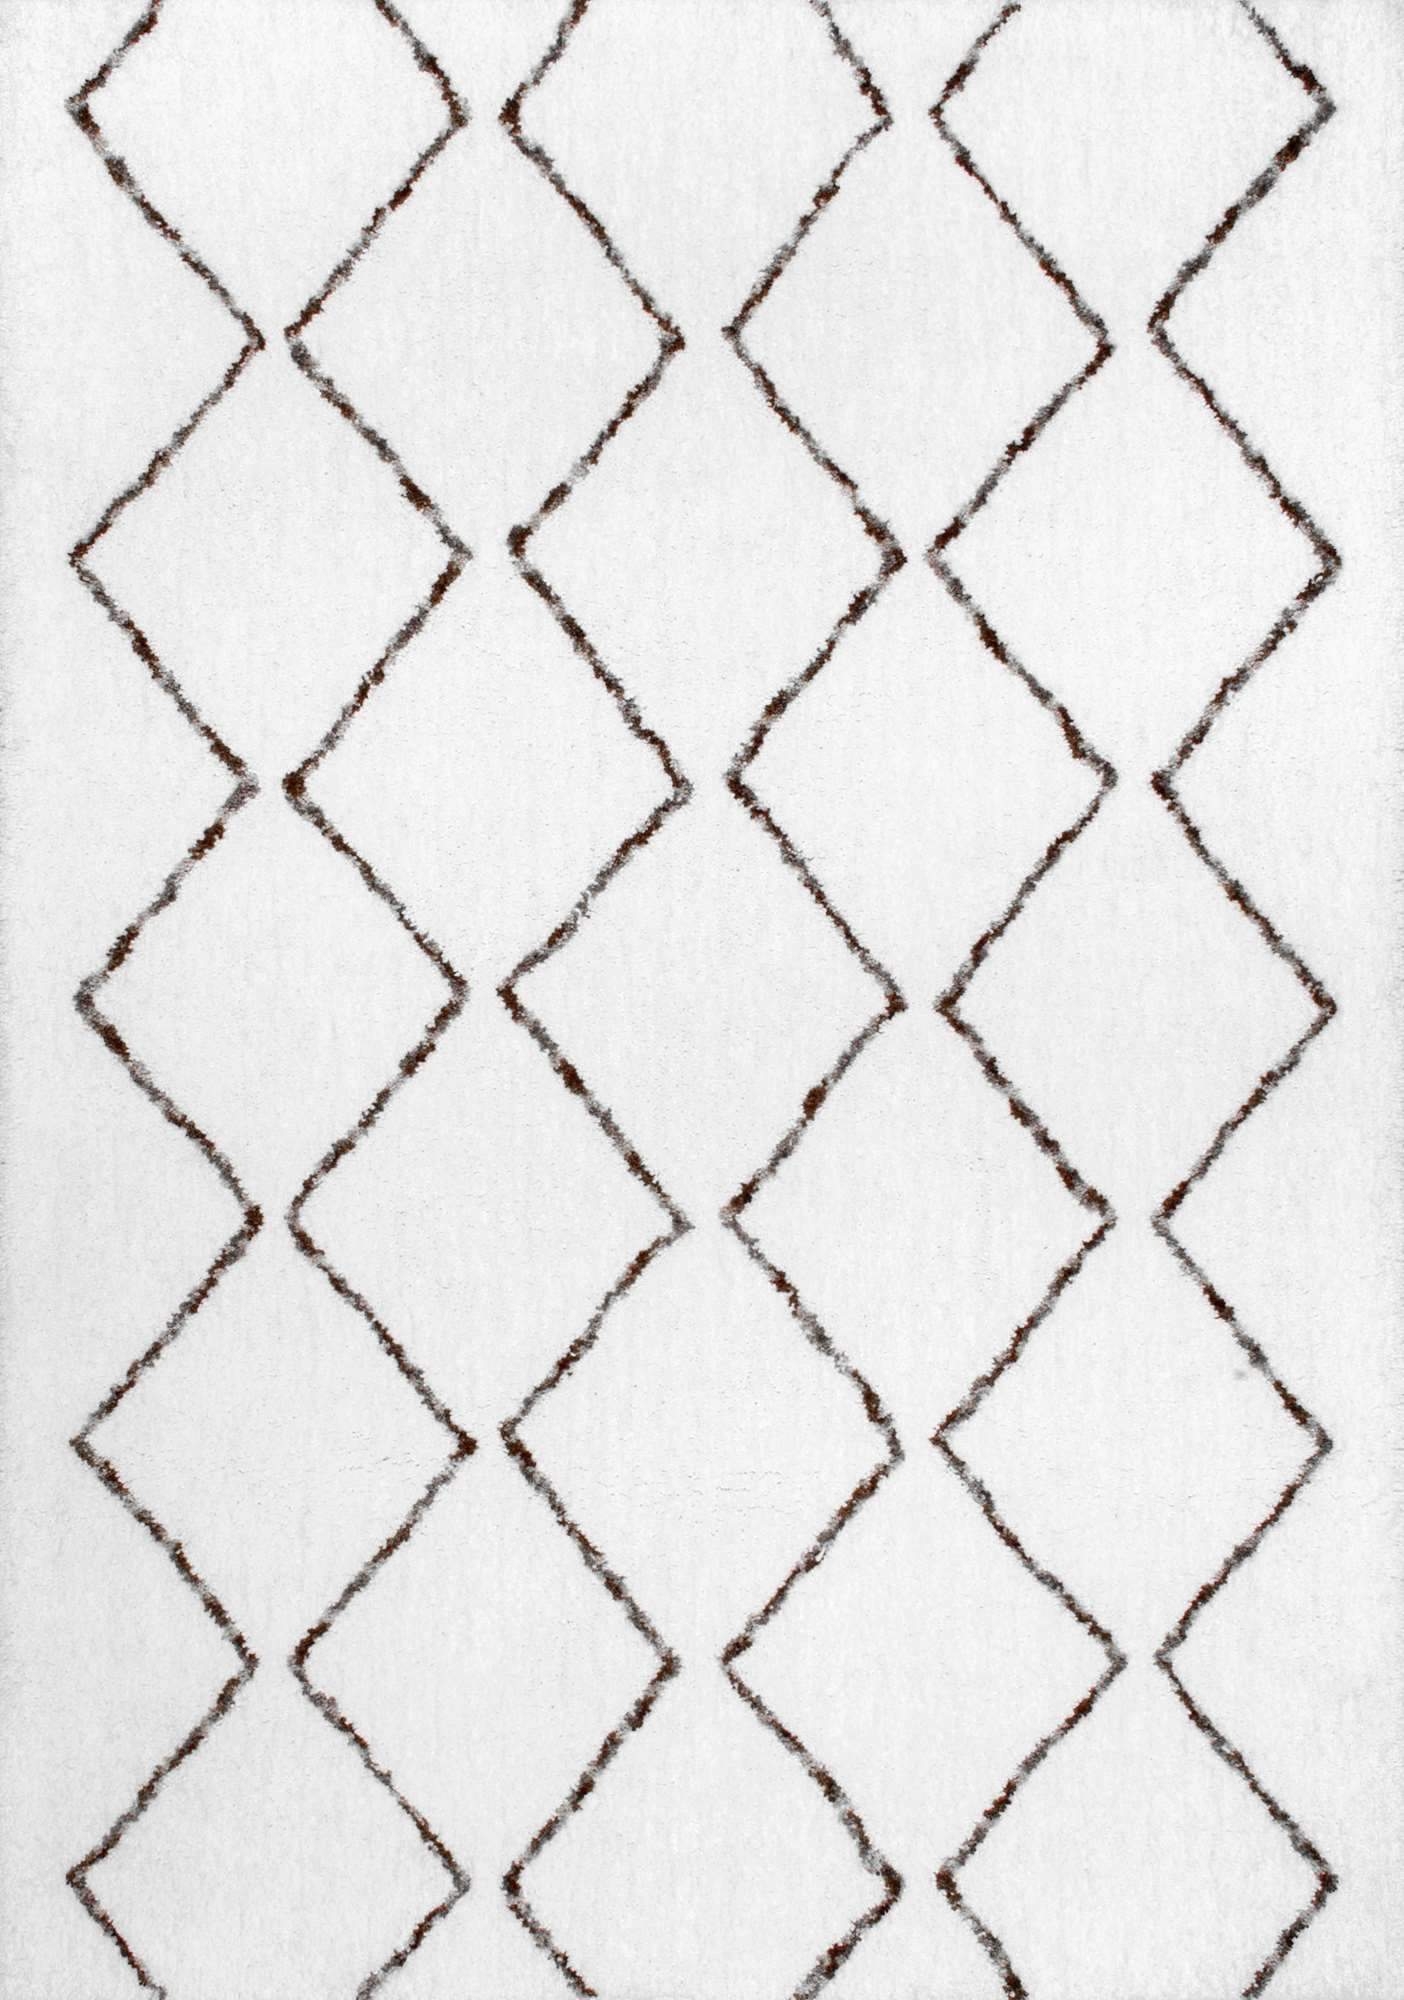 Hand Tufted Corinth Rug - 6' x 9' - Image 1